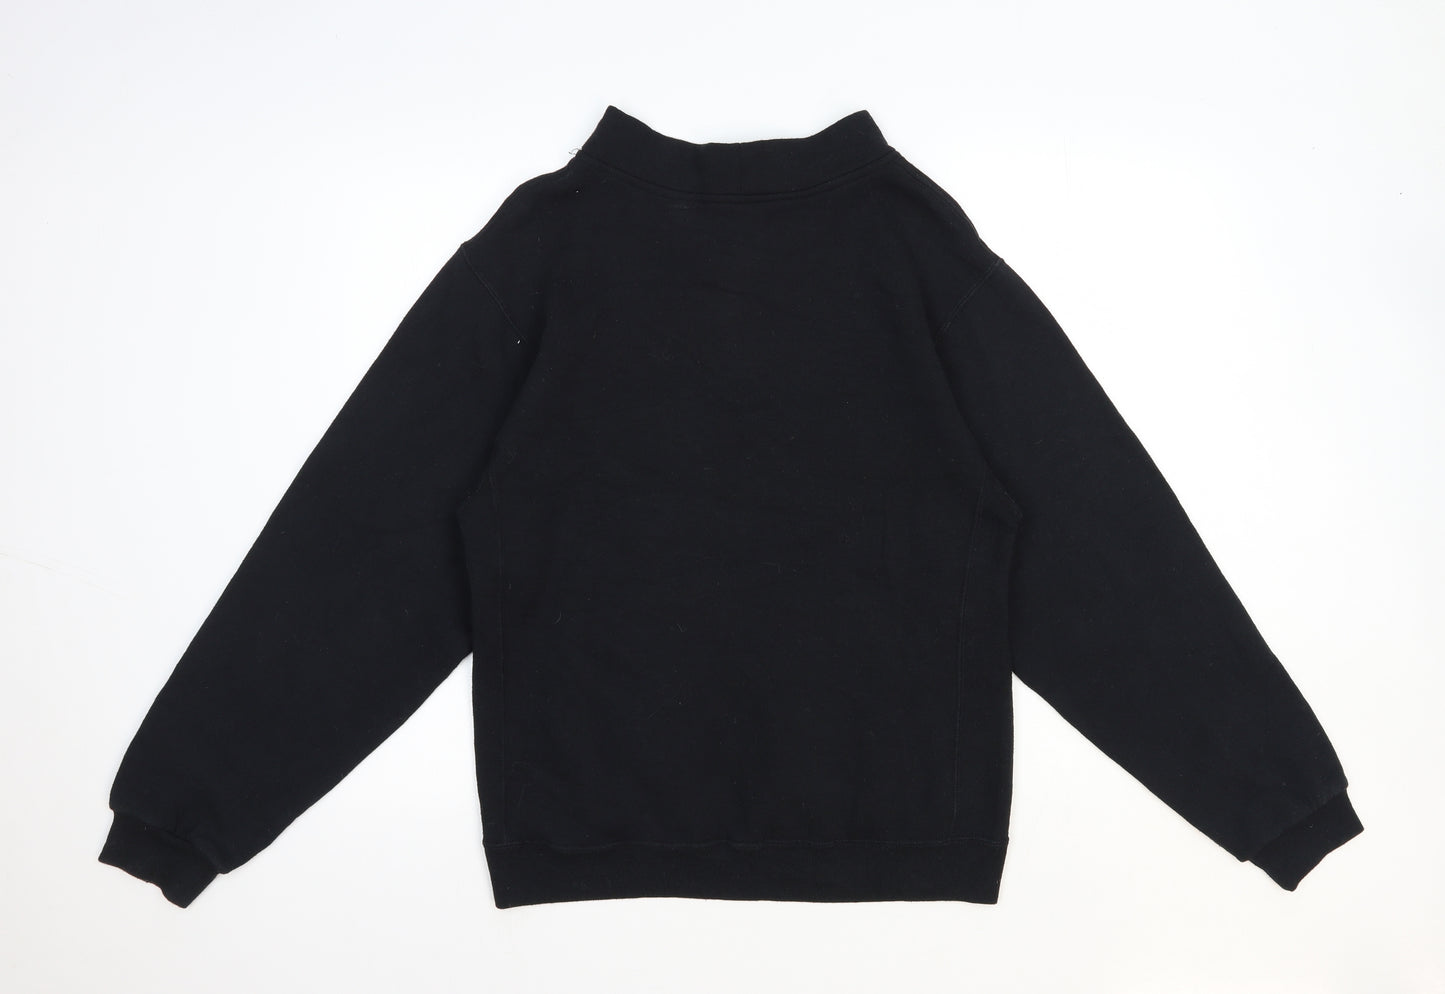 Preworn Mens Black Polyester Pullover Sweatshirt Size XS